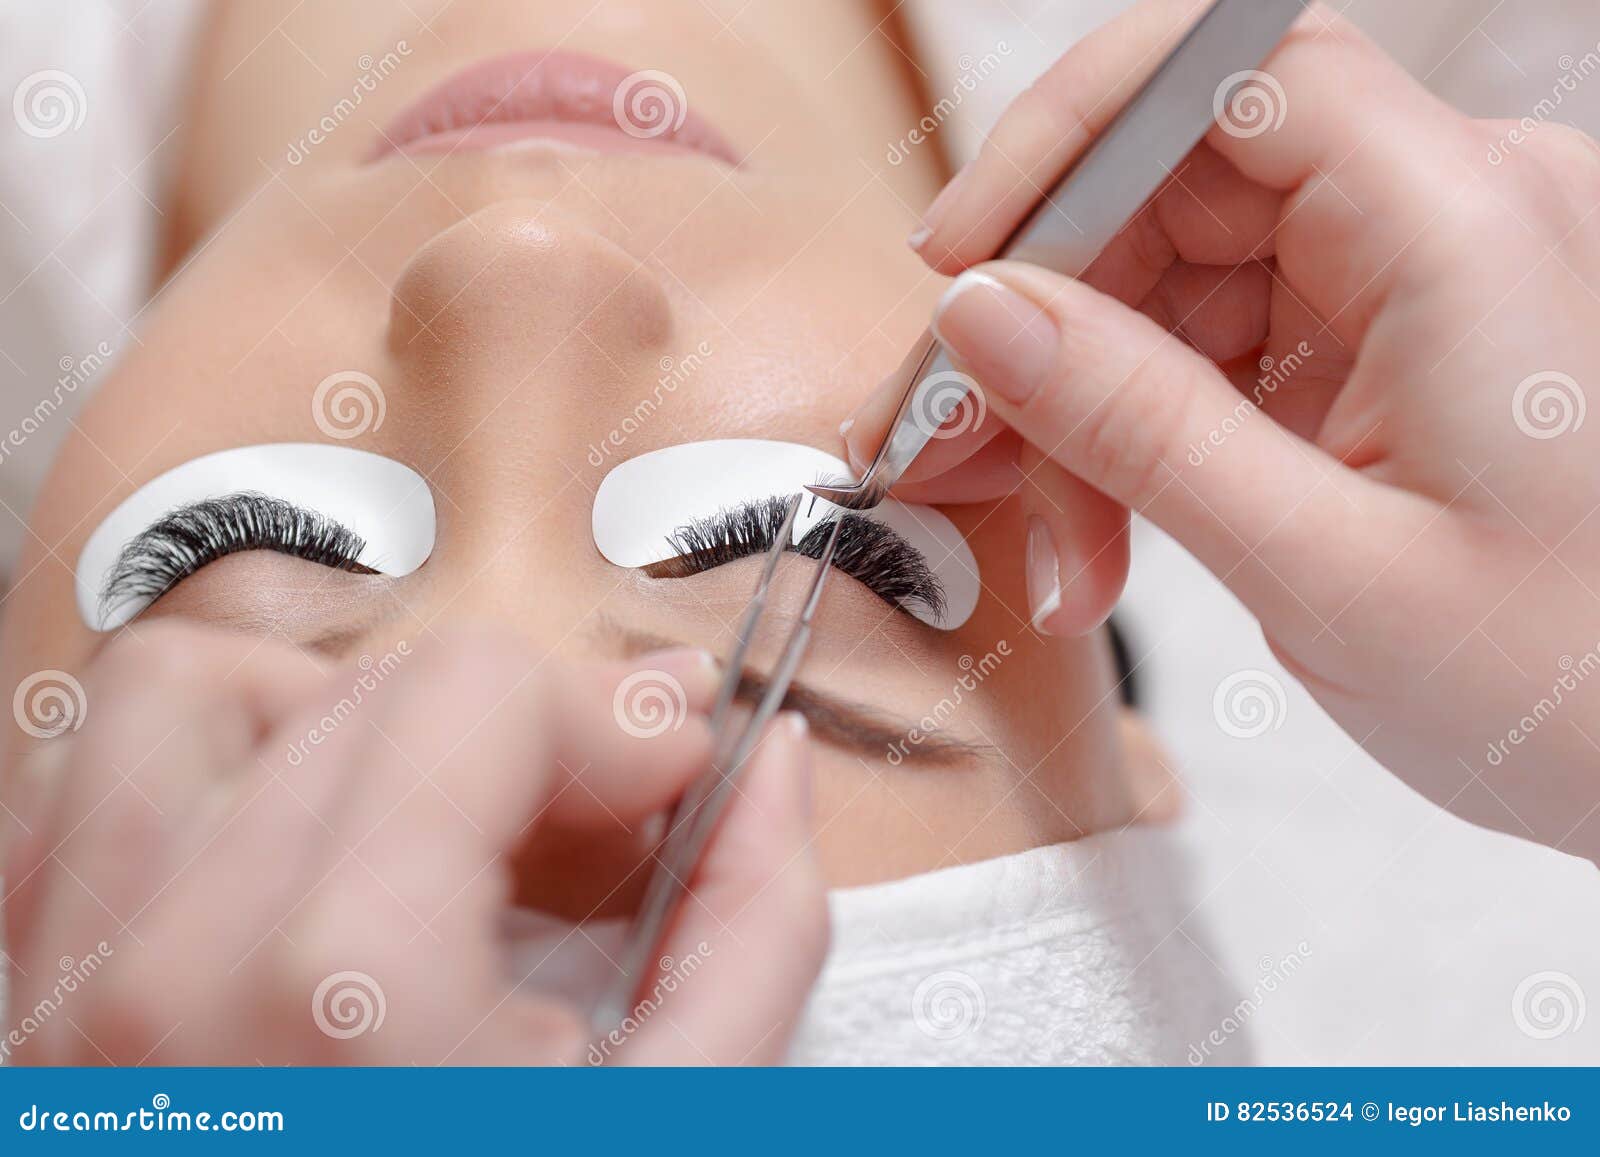 eyelash extension procedure. woman eye with long eyelashes